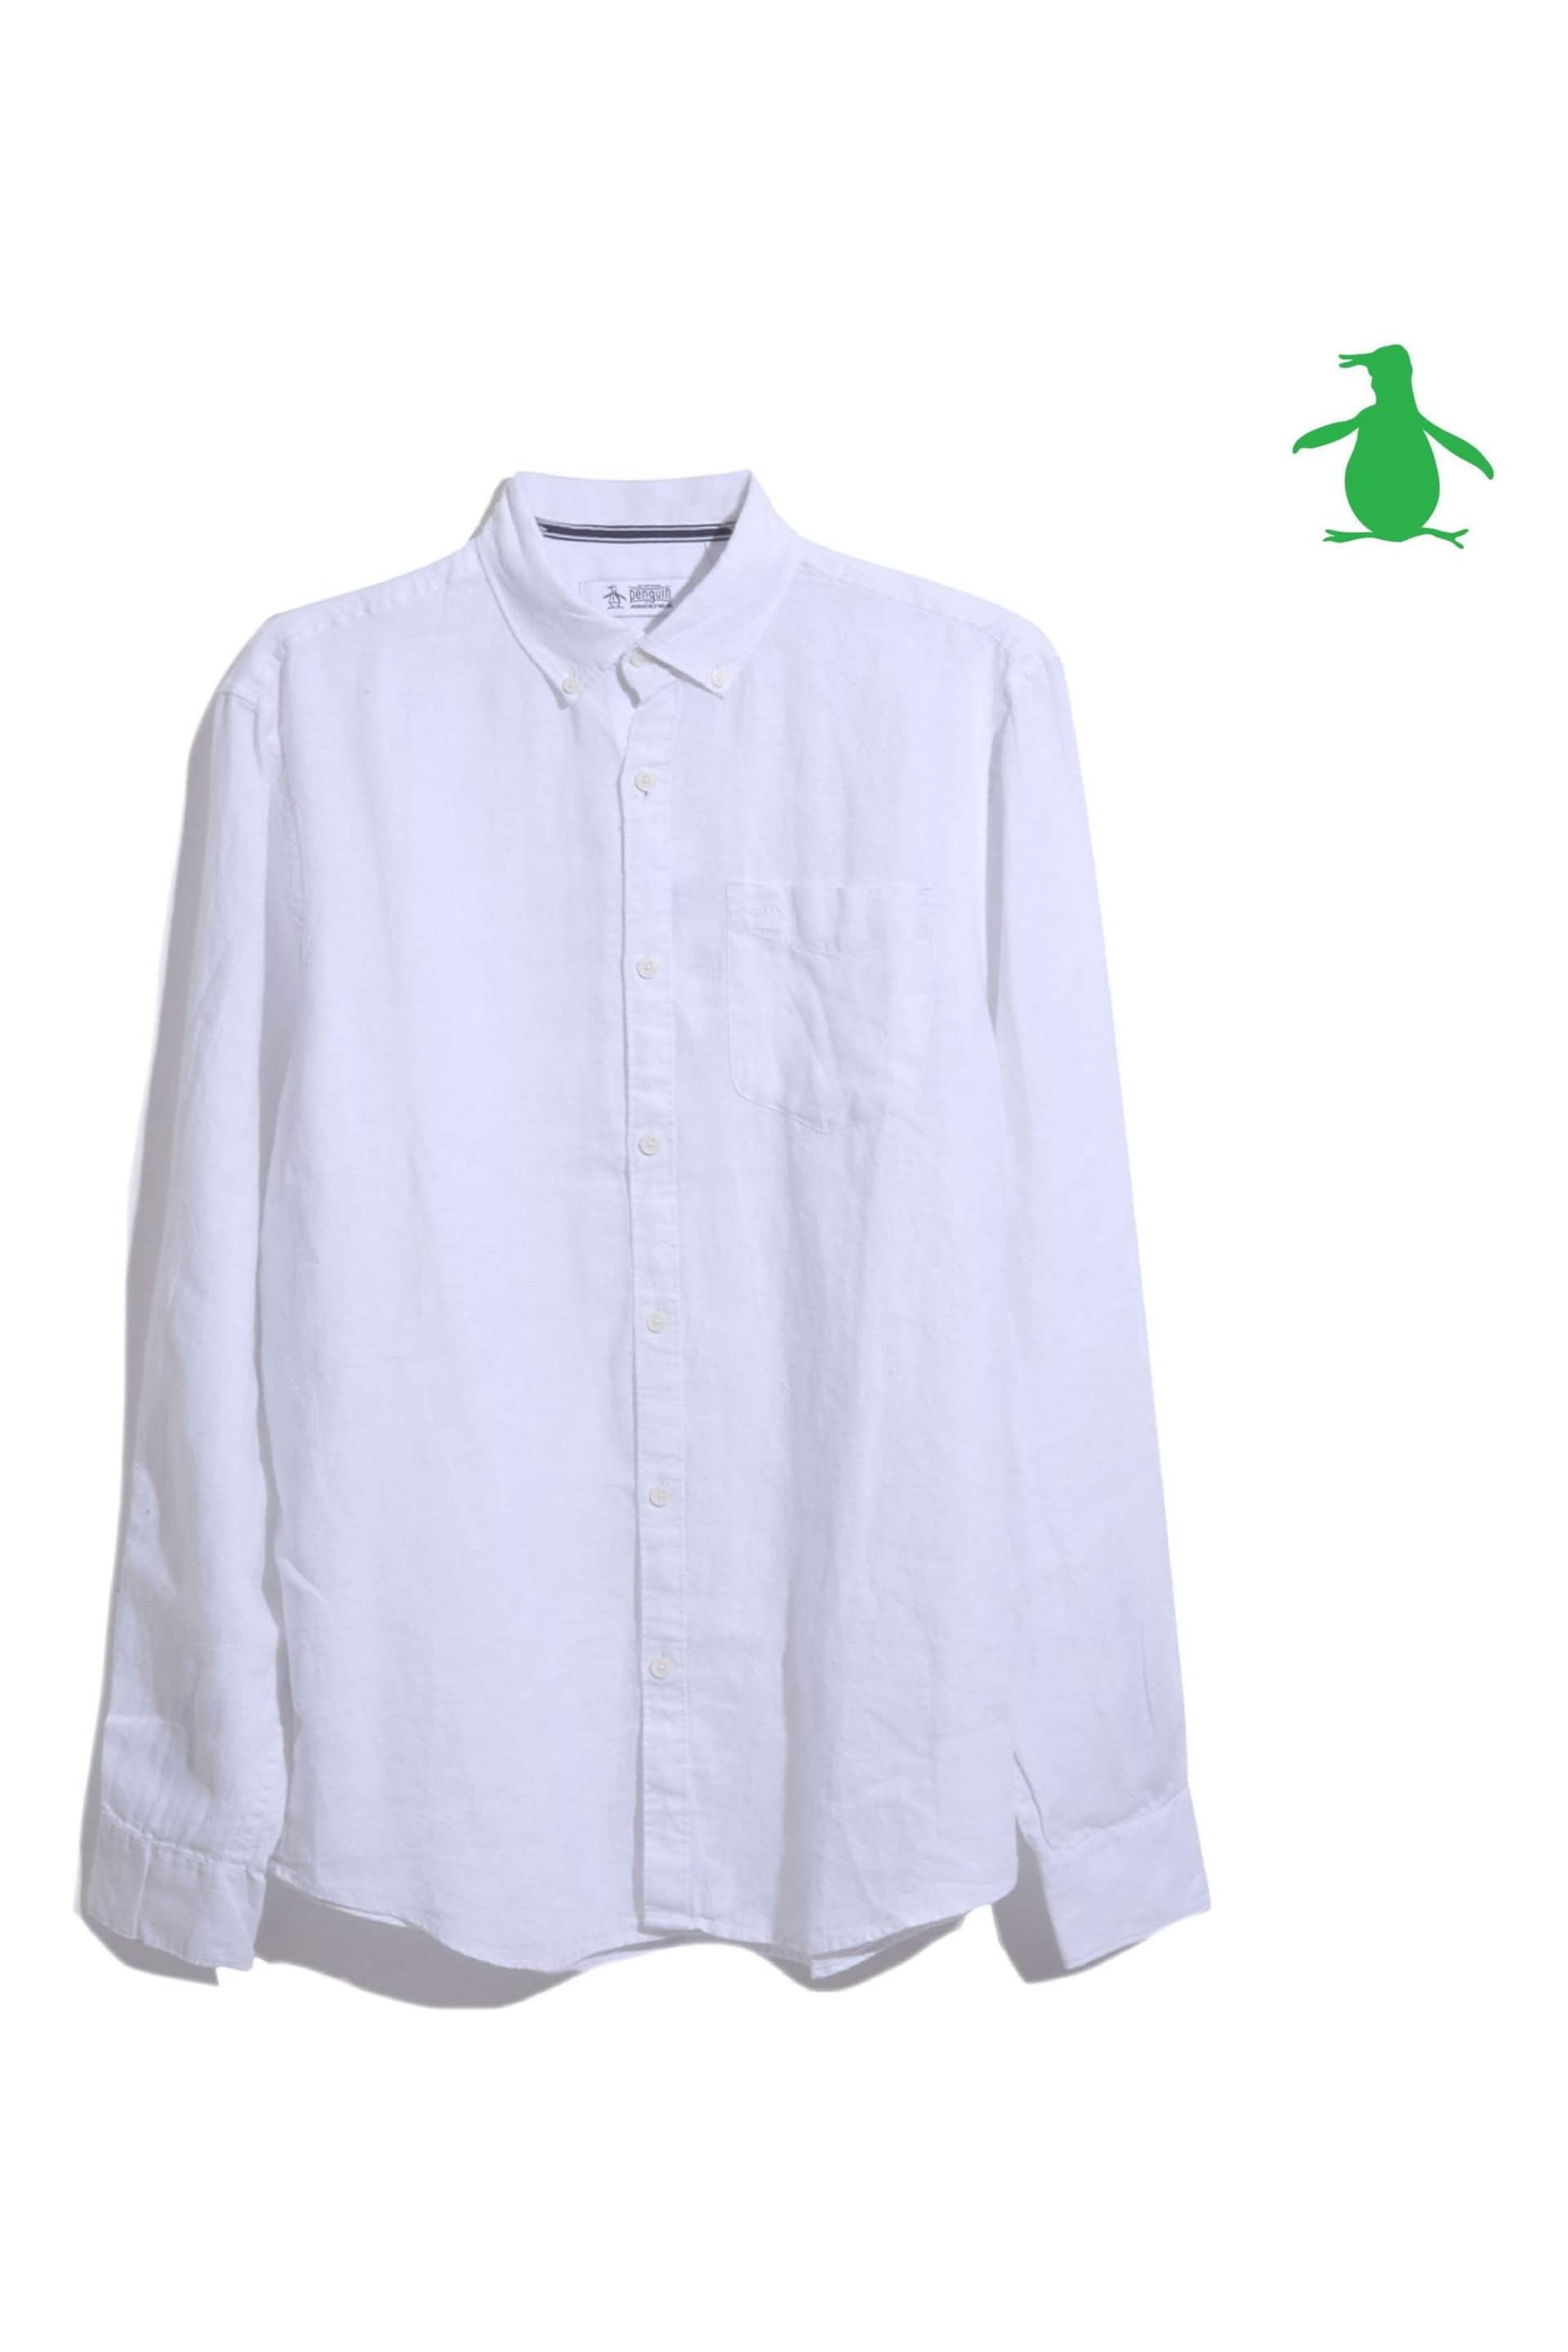 Original Penguin Delave Linen Long Sleeve White Shirt - Image 4 of 4